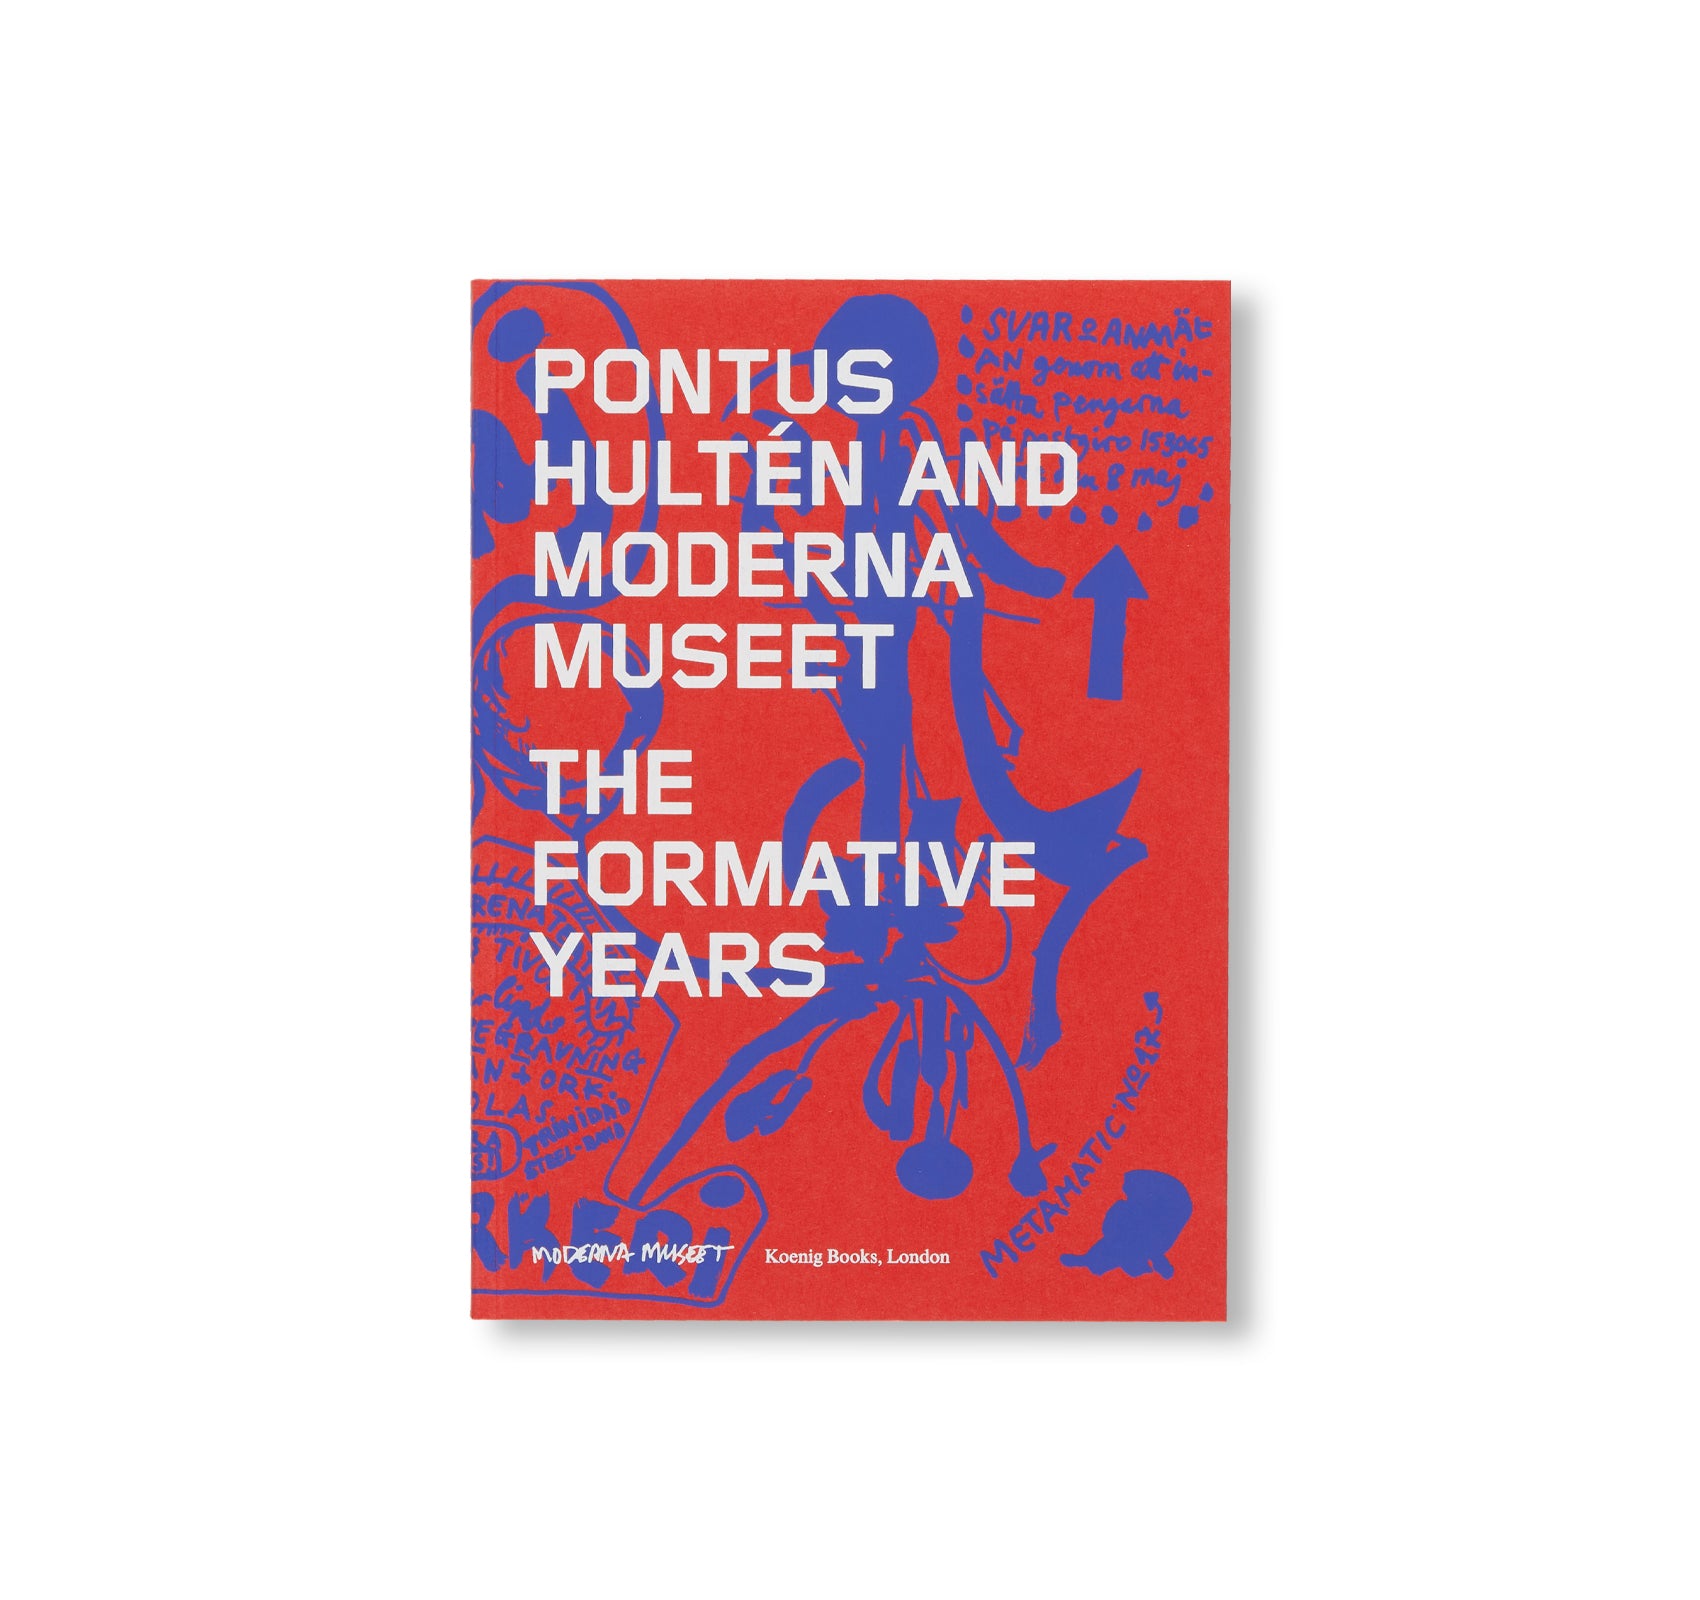 PONTUS HULTÉN AND MODERNA MUSEET: THE FORMATIVE YEARS by Pontus Hultén